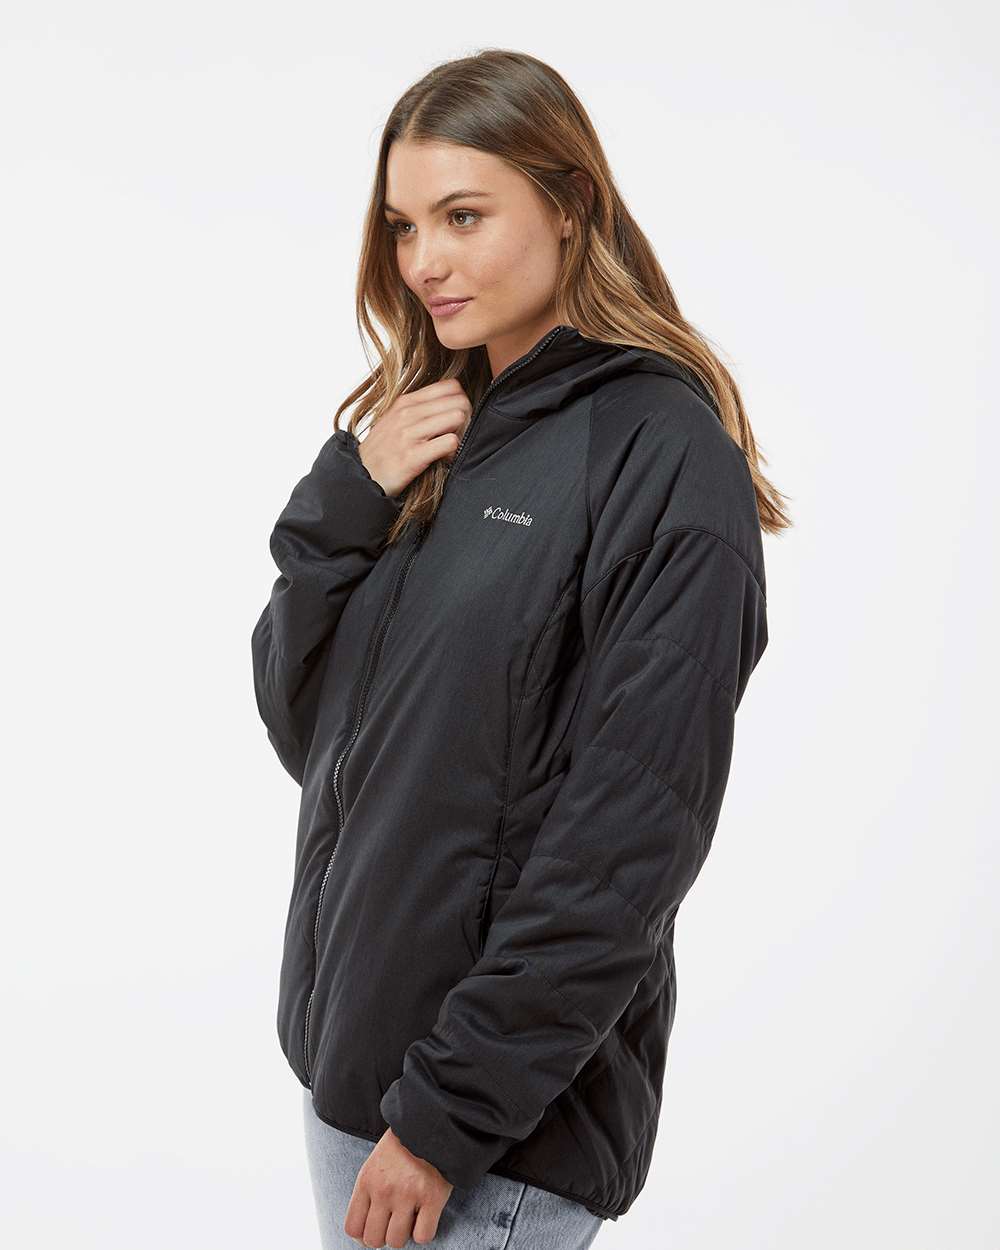 Columbia Switchback - chaqueta con forro de sherpa para mujer